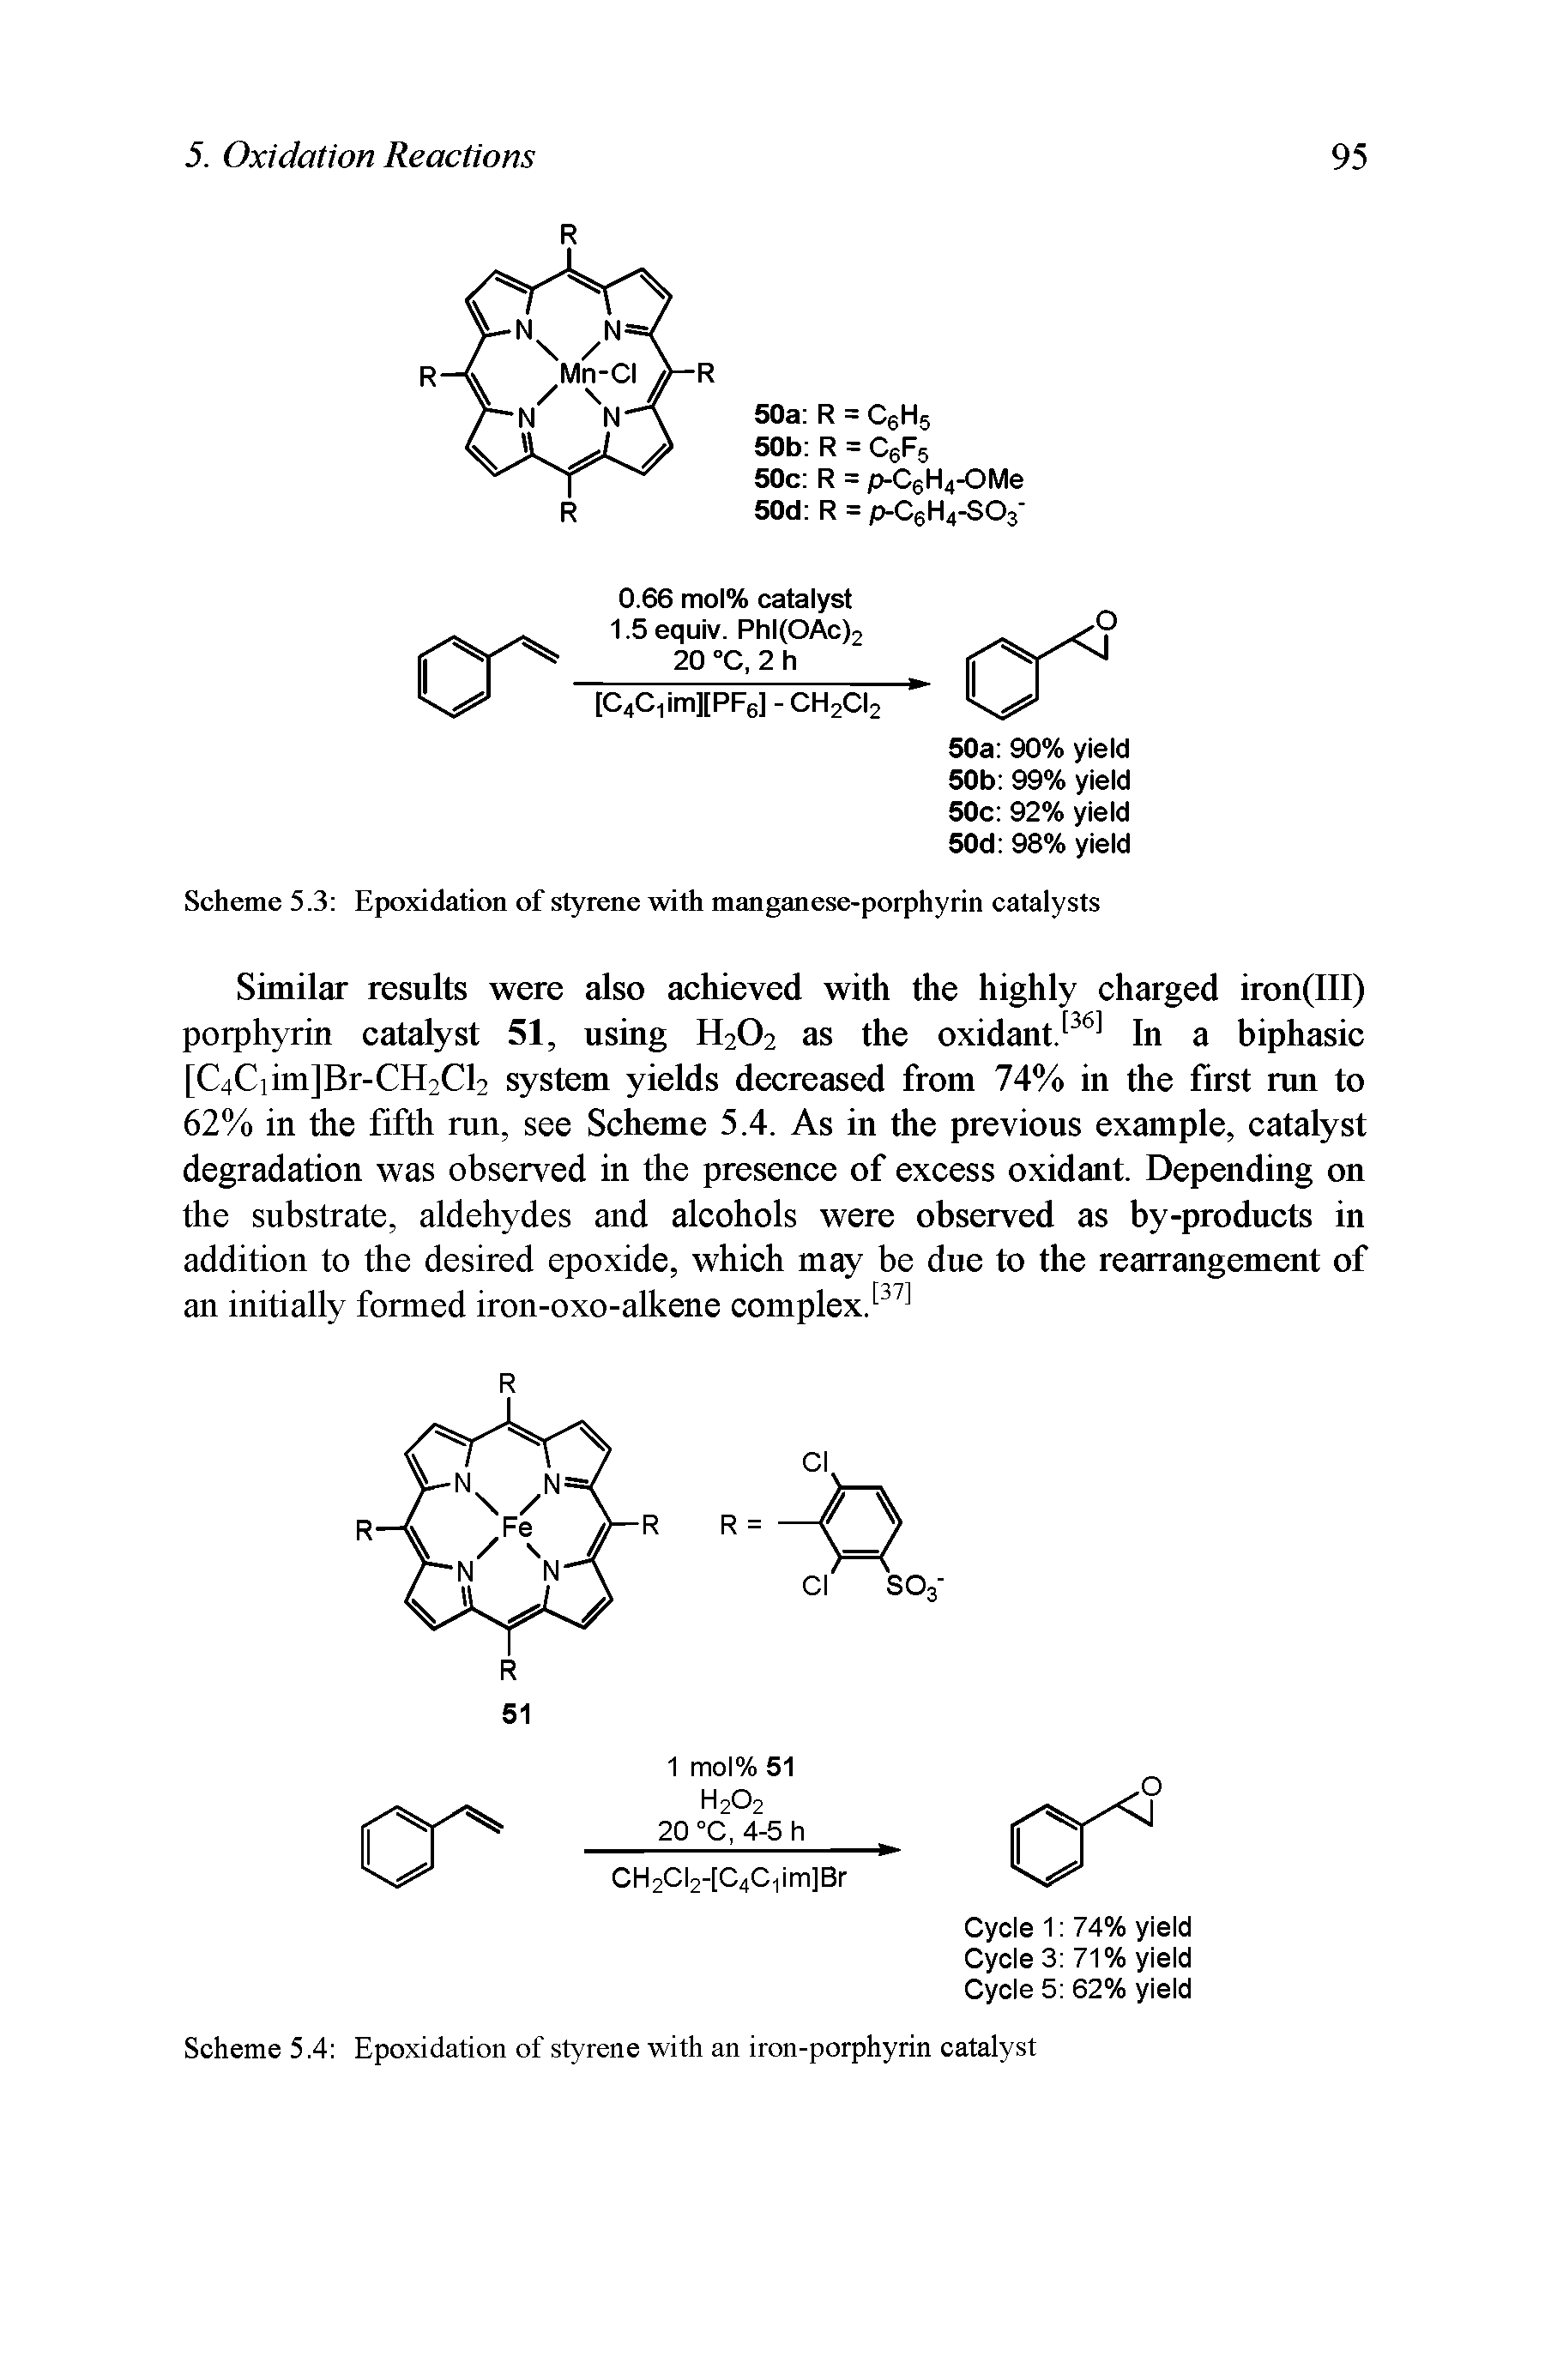 Scheme 5.3 Epoxidation of styrene with manganese-porphyrin catalysts...